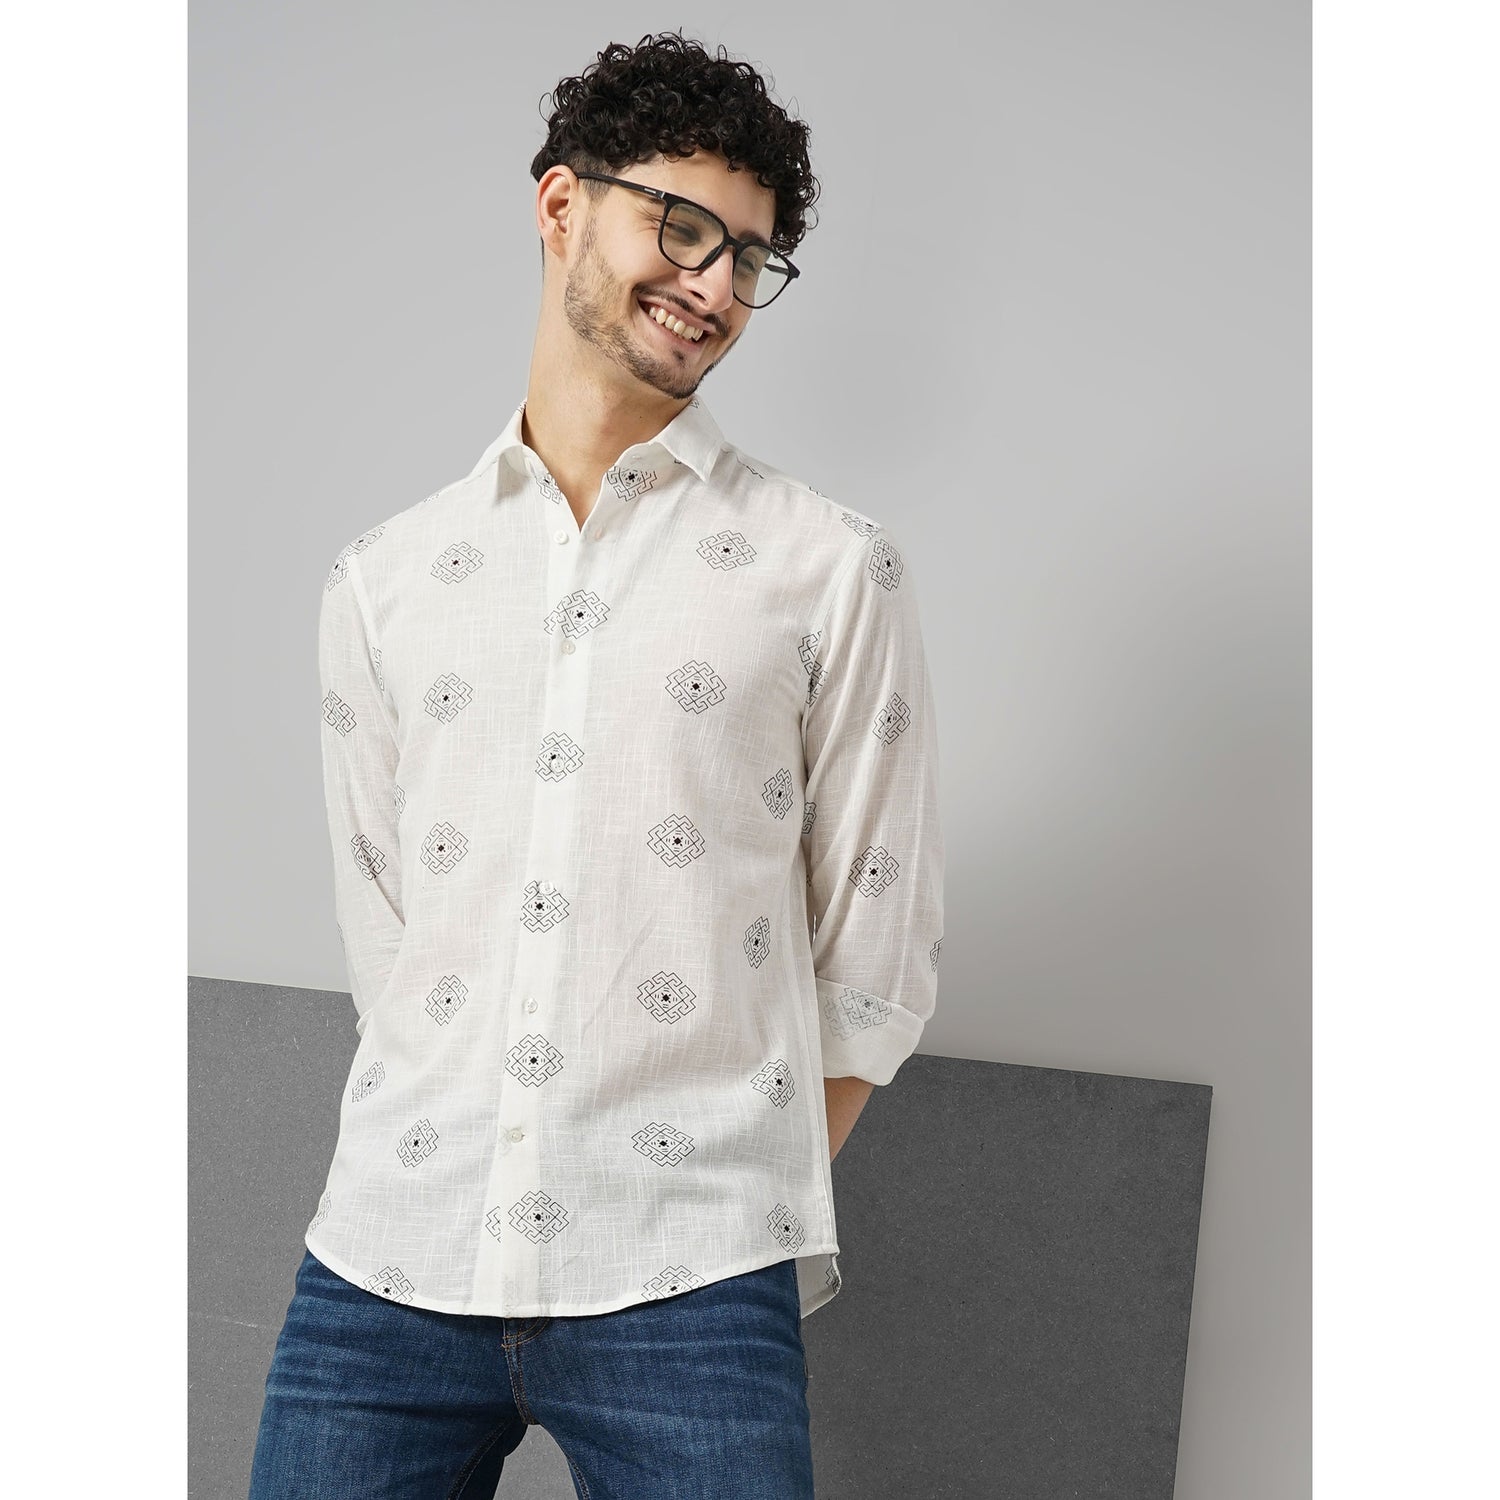 Men White Printed Regular Fit Cotton Casual Shirt (GABASLUBPRI)